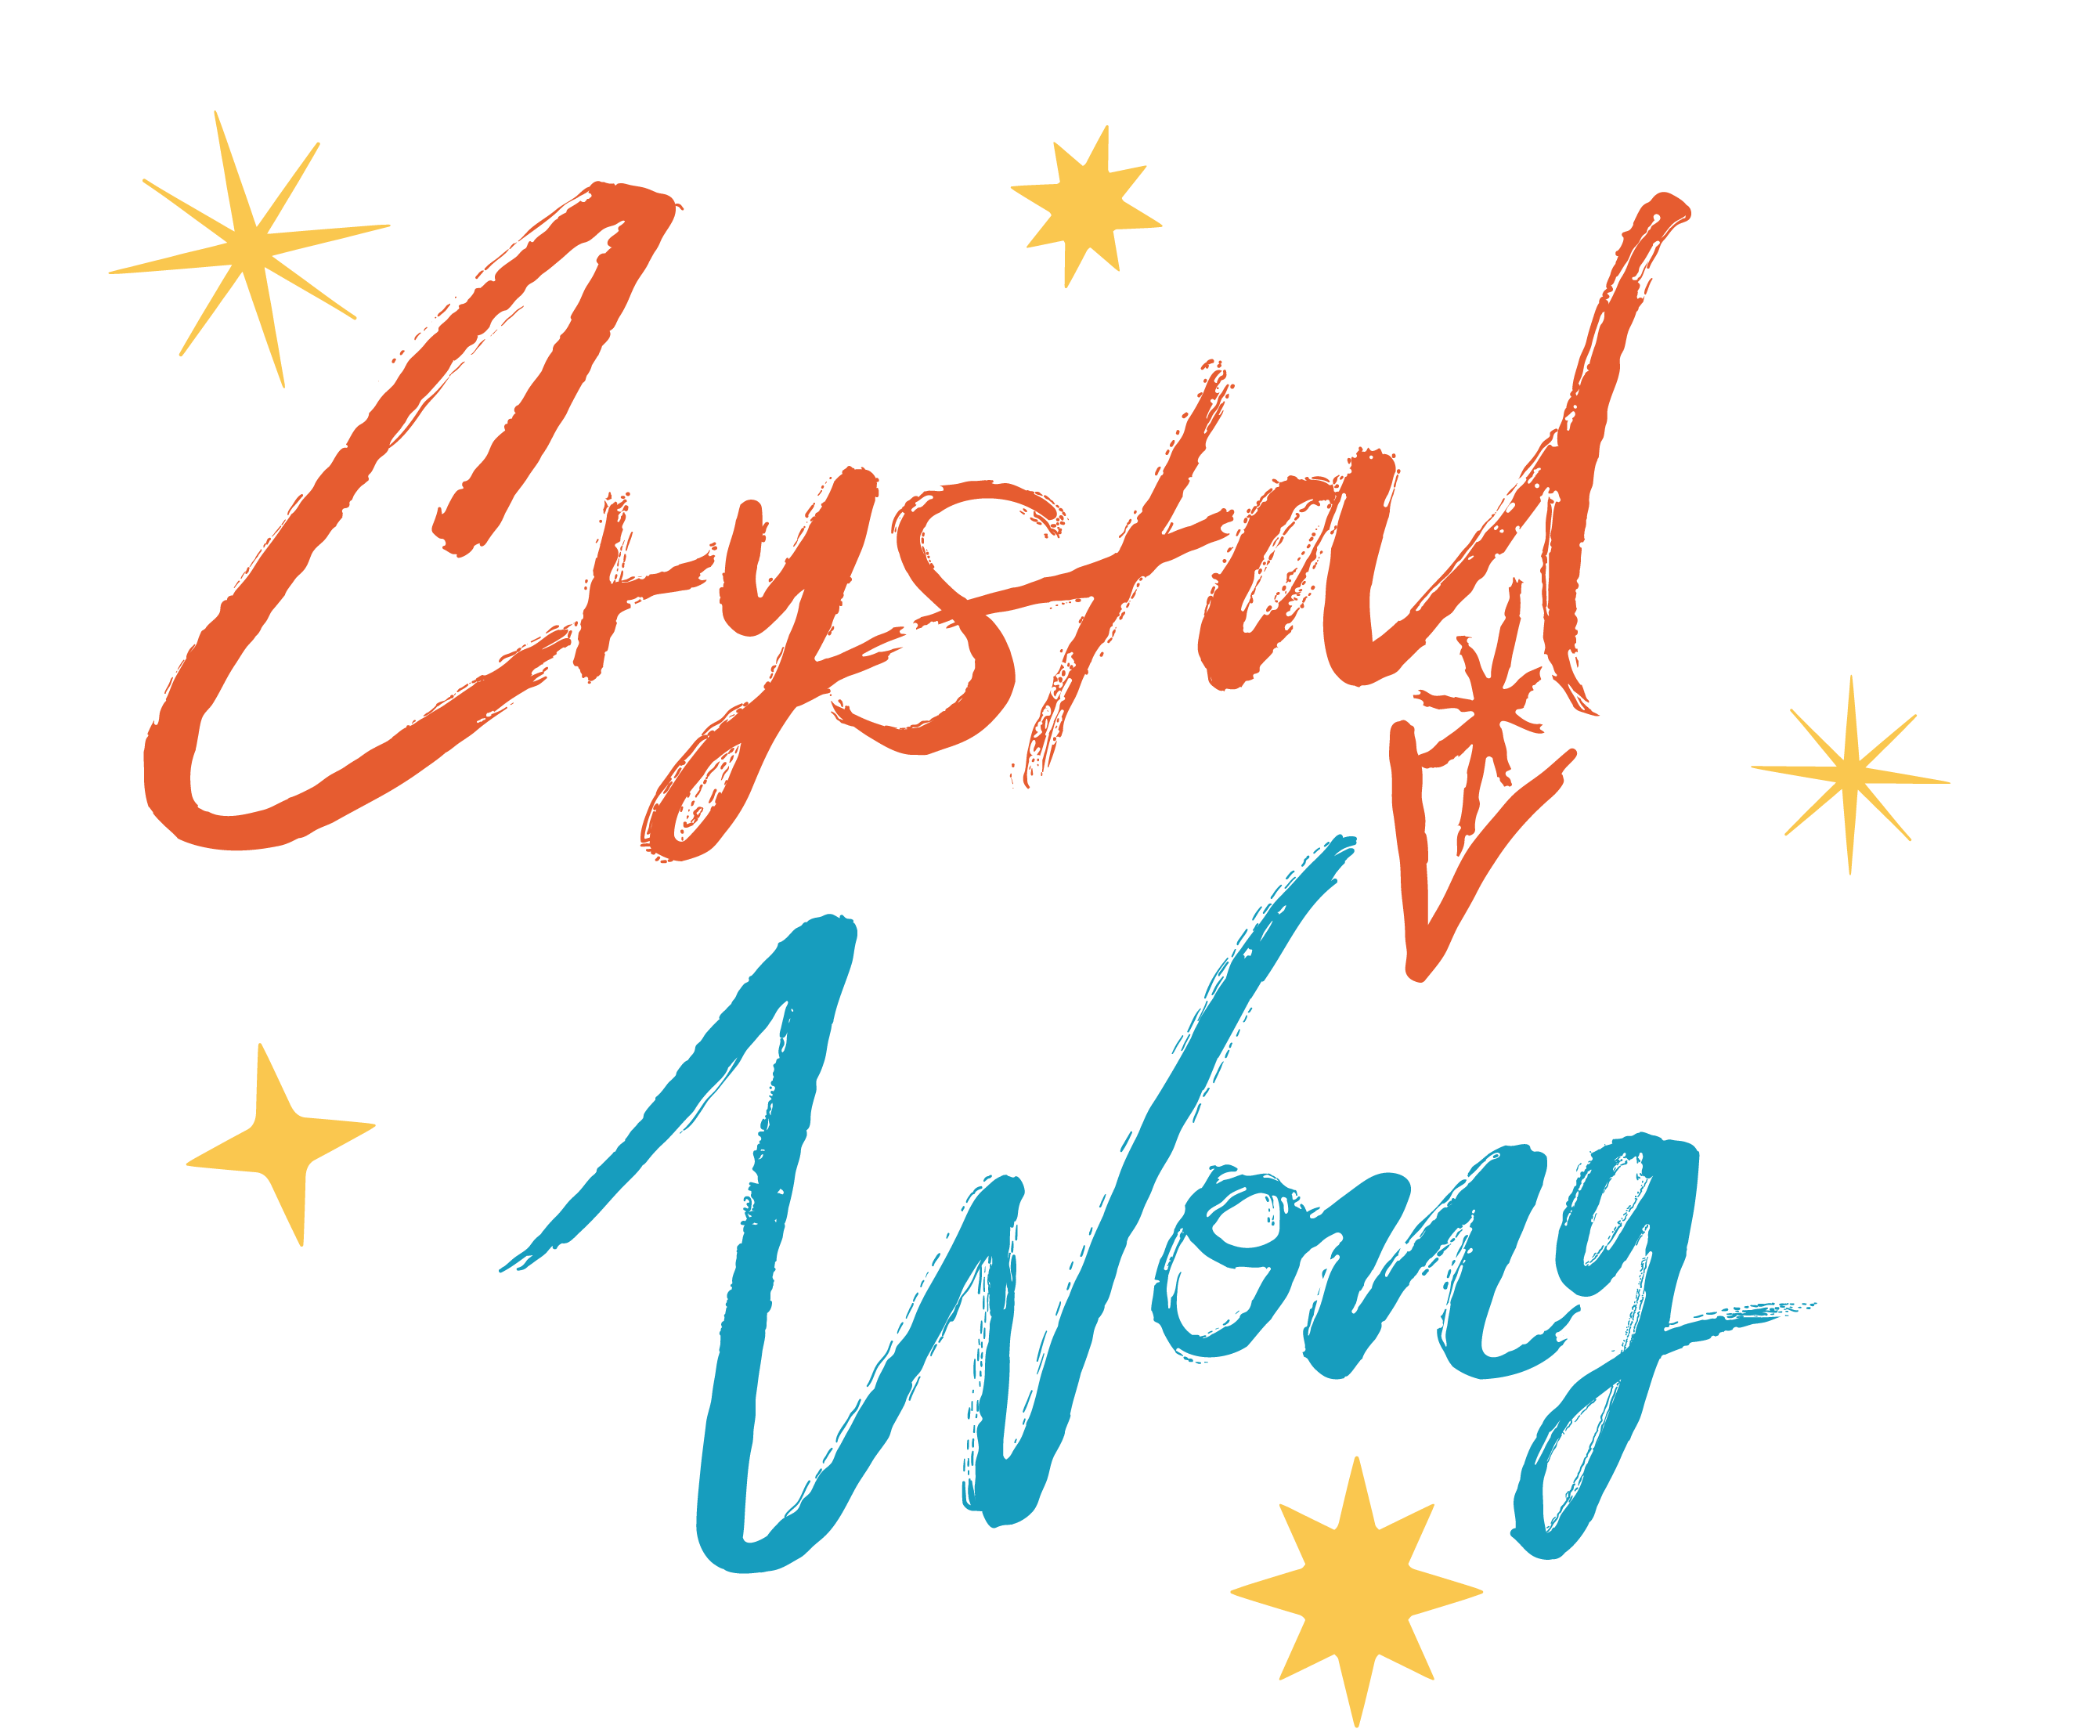 Crystal Wong's Portfolio